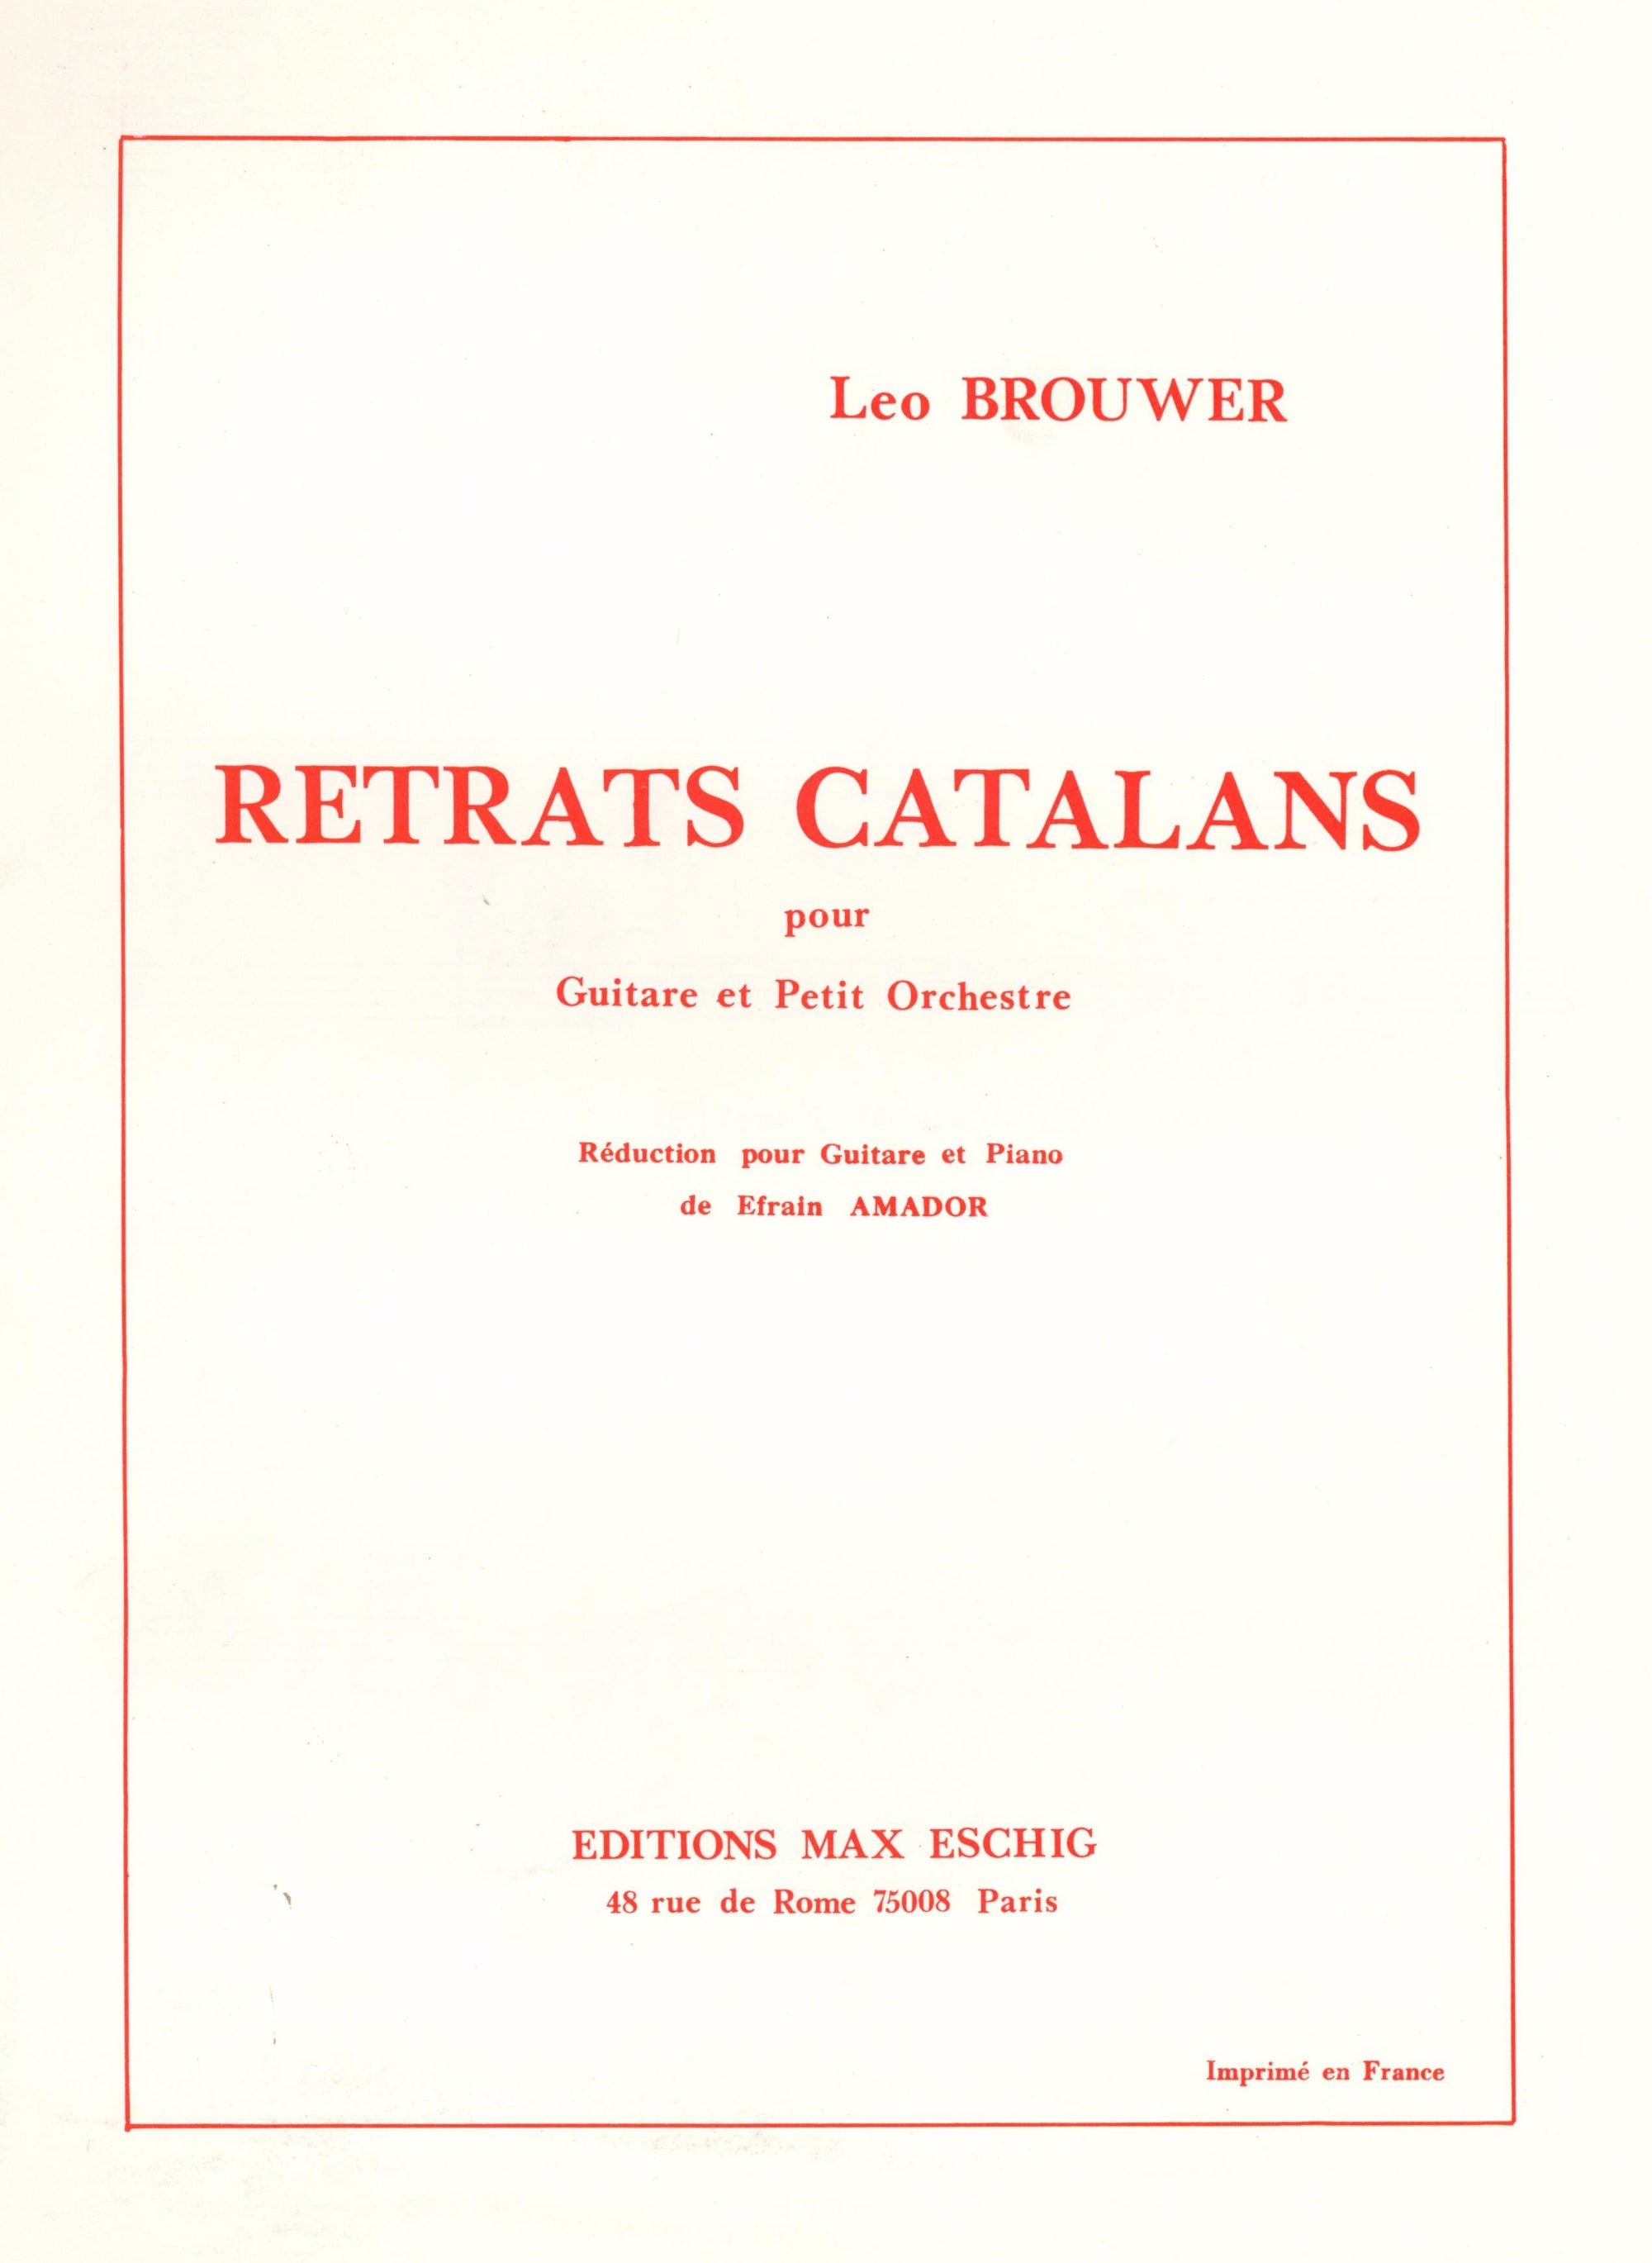 Brouwer: Retrats Catalans